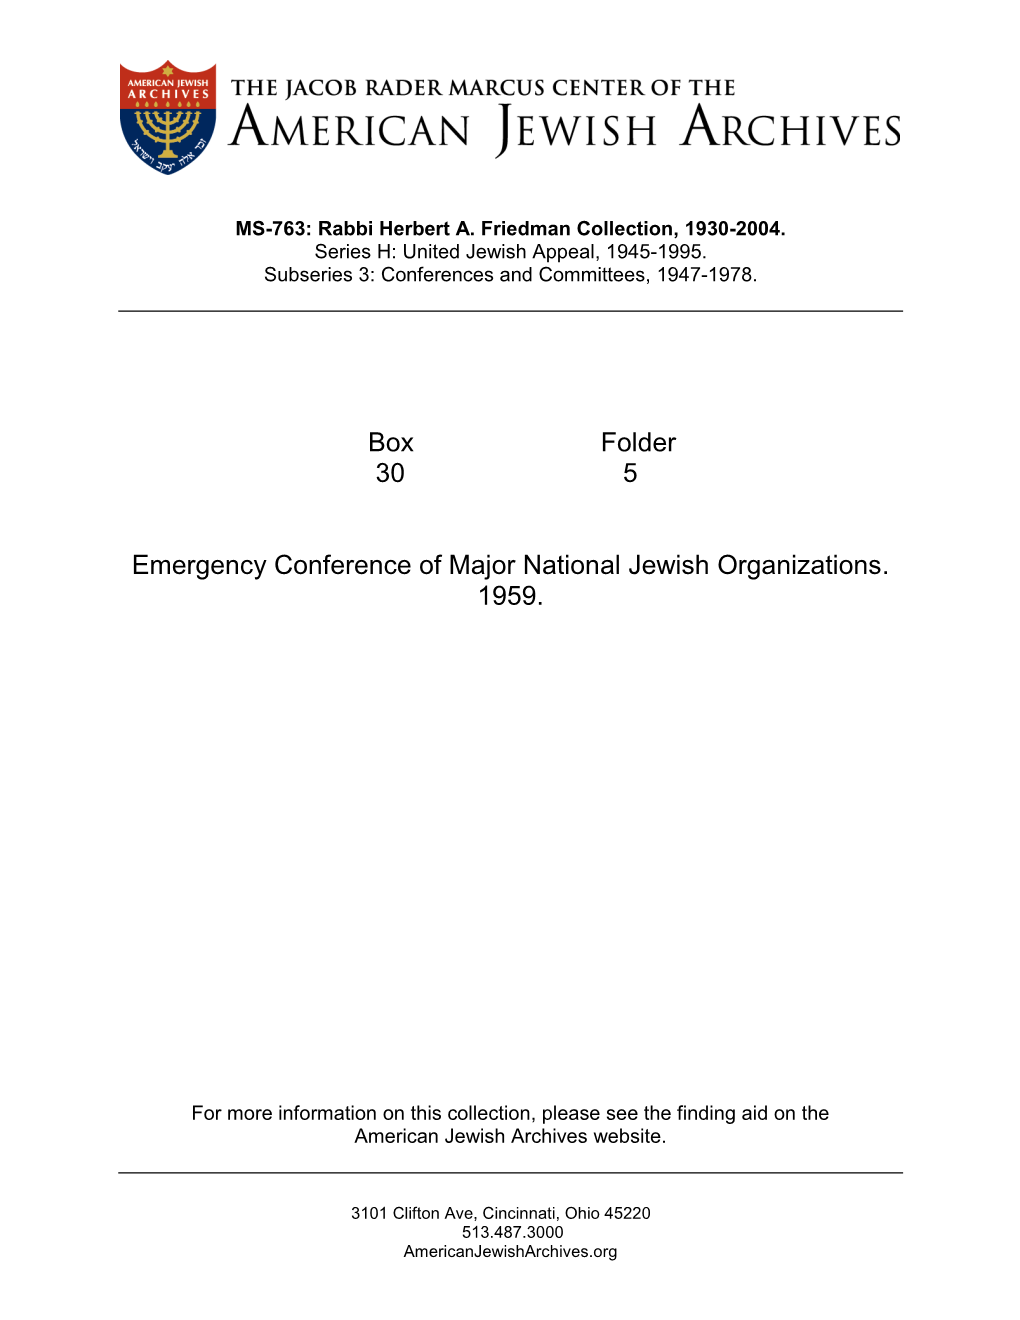 Box Folder 30 5 Emergency Conference of Major National